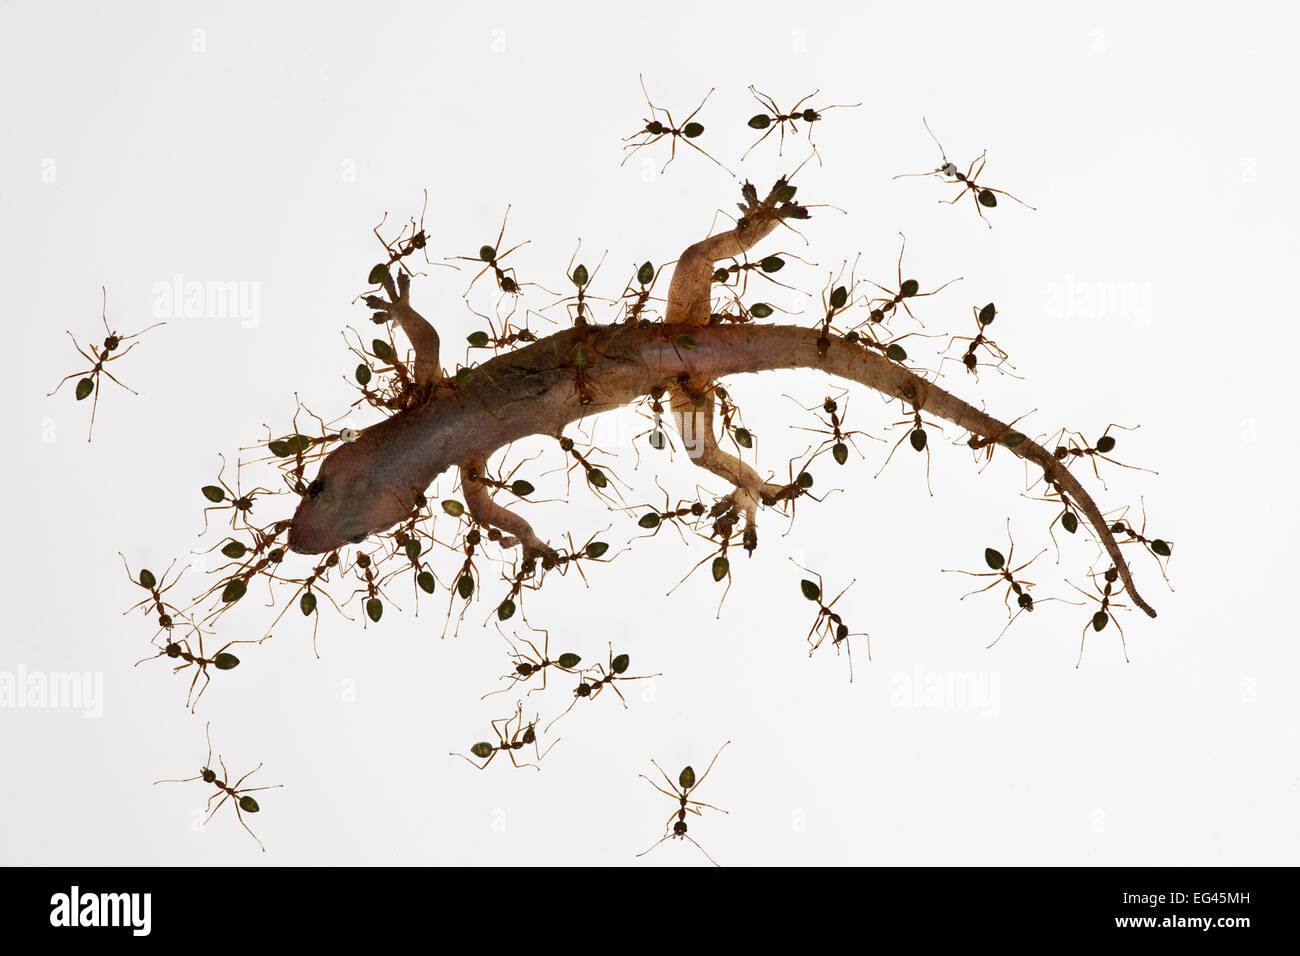 https://c8.alamy.com/comp/EG45MH/green-tree-ants-oecophylla-smaragdina-attacking-common-house-gecko-EG45MH.jpg